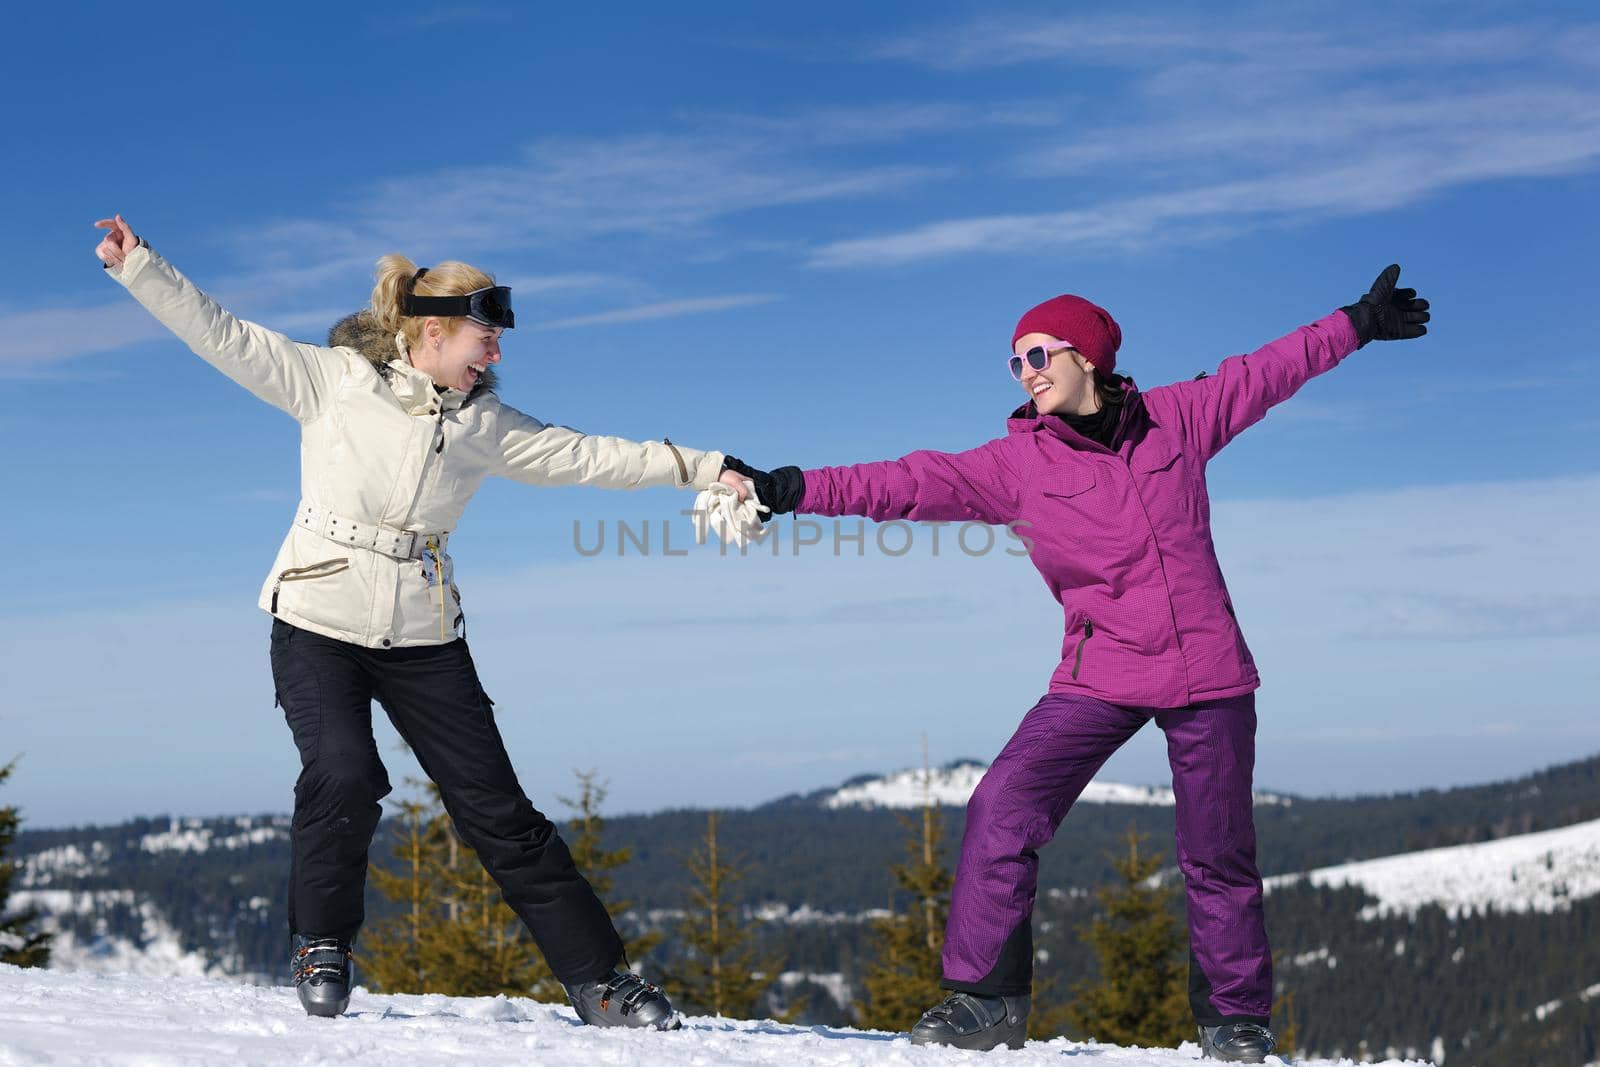 winter season fun with group of girls by dotshock